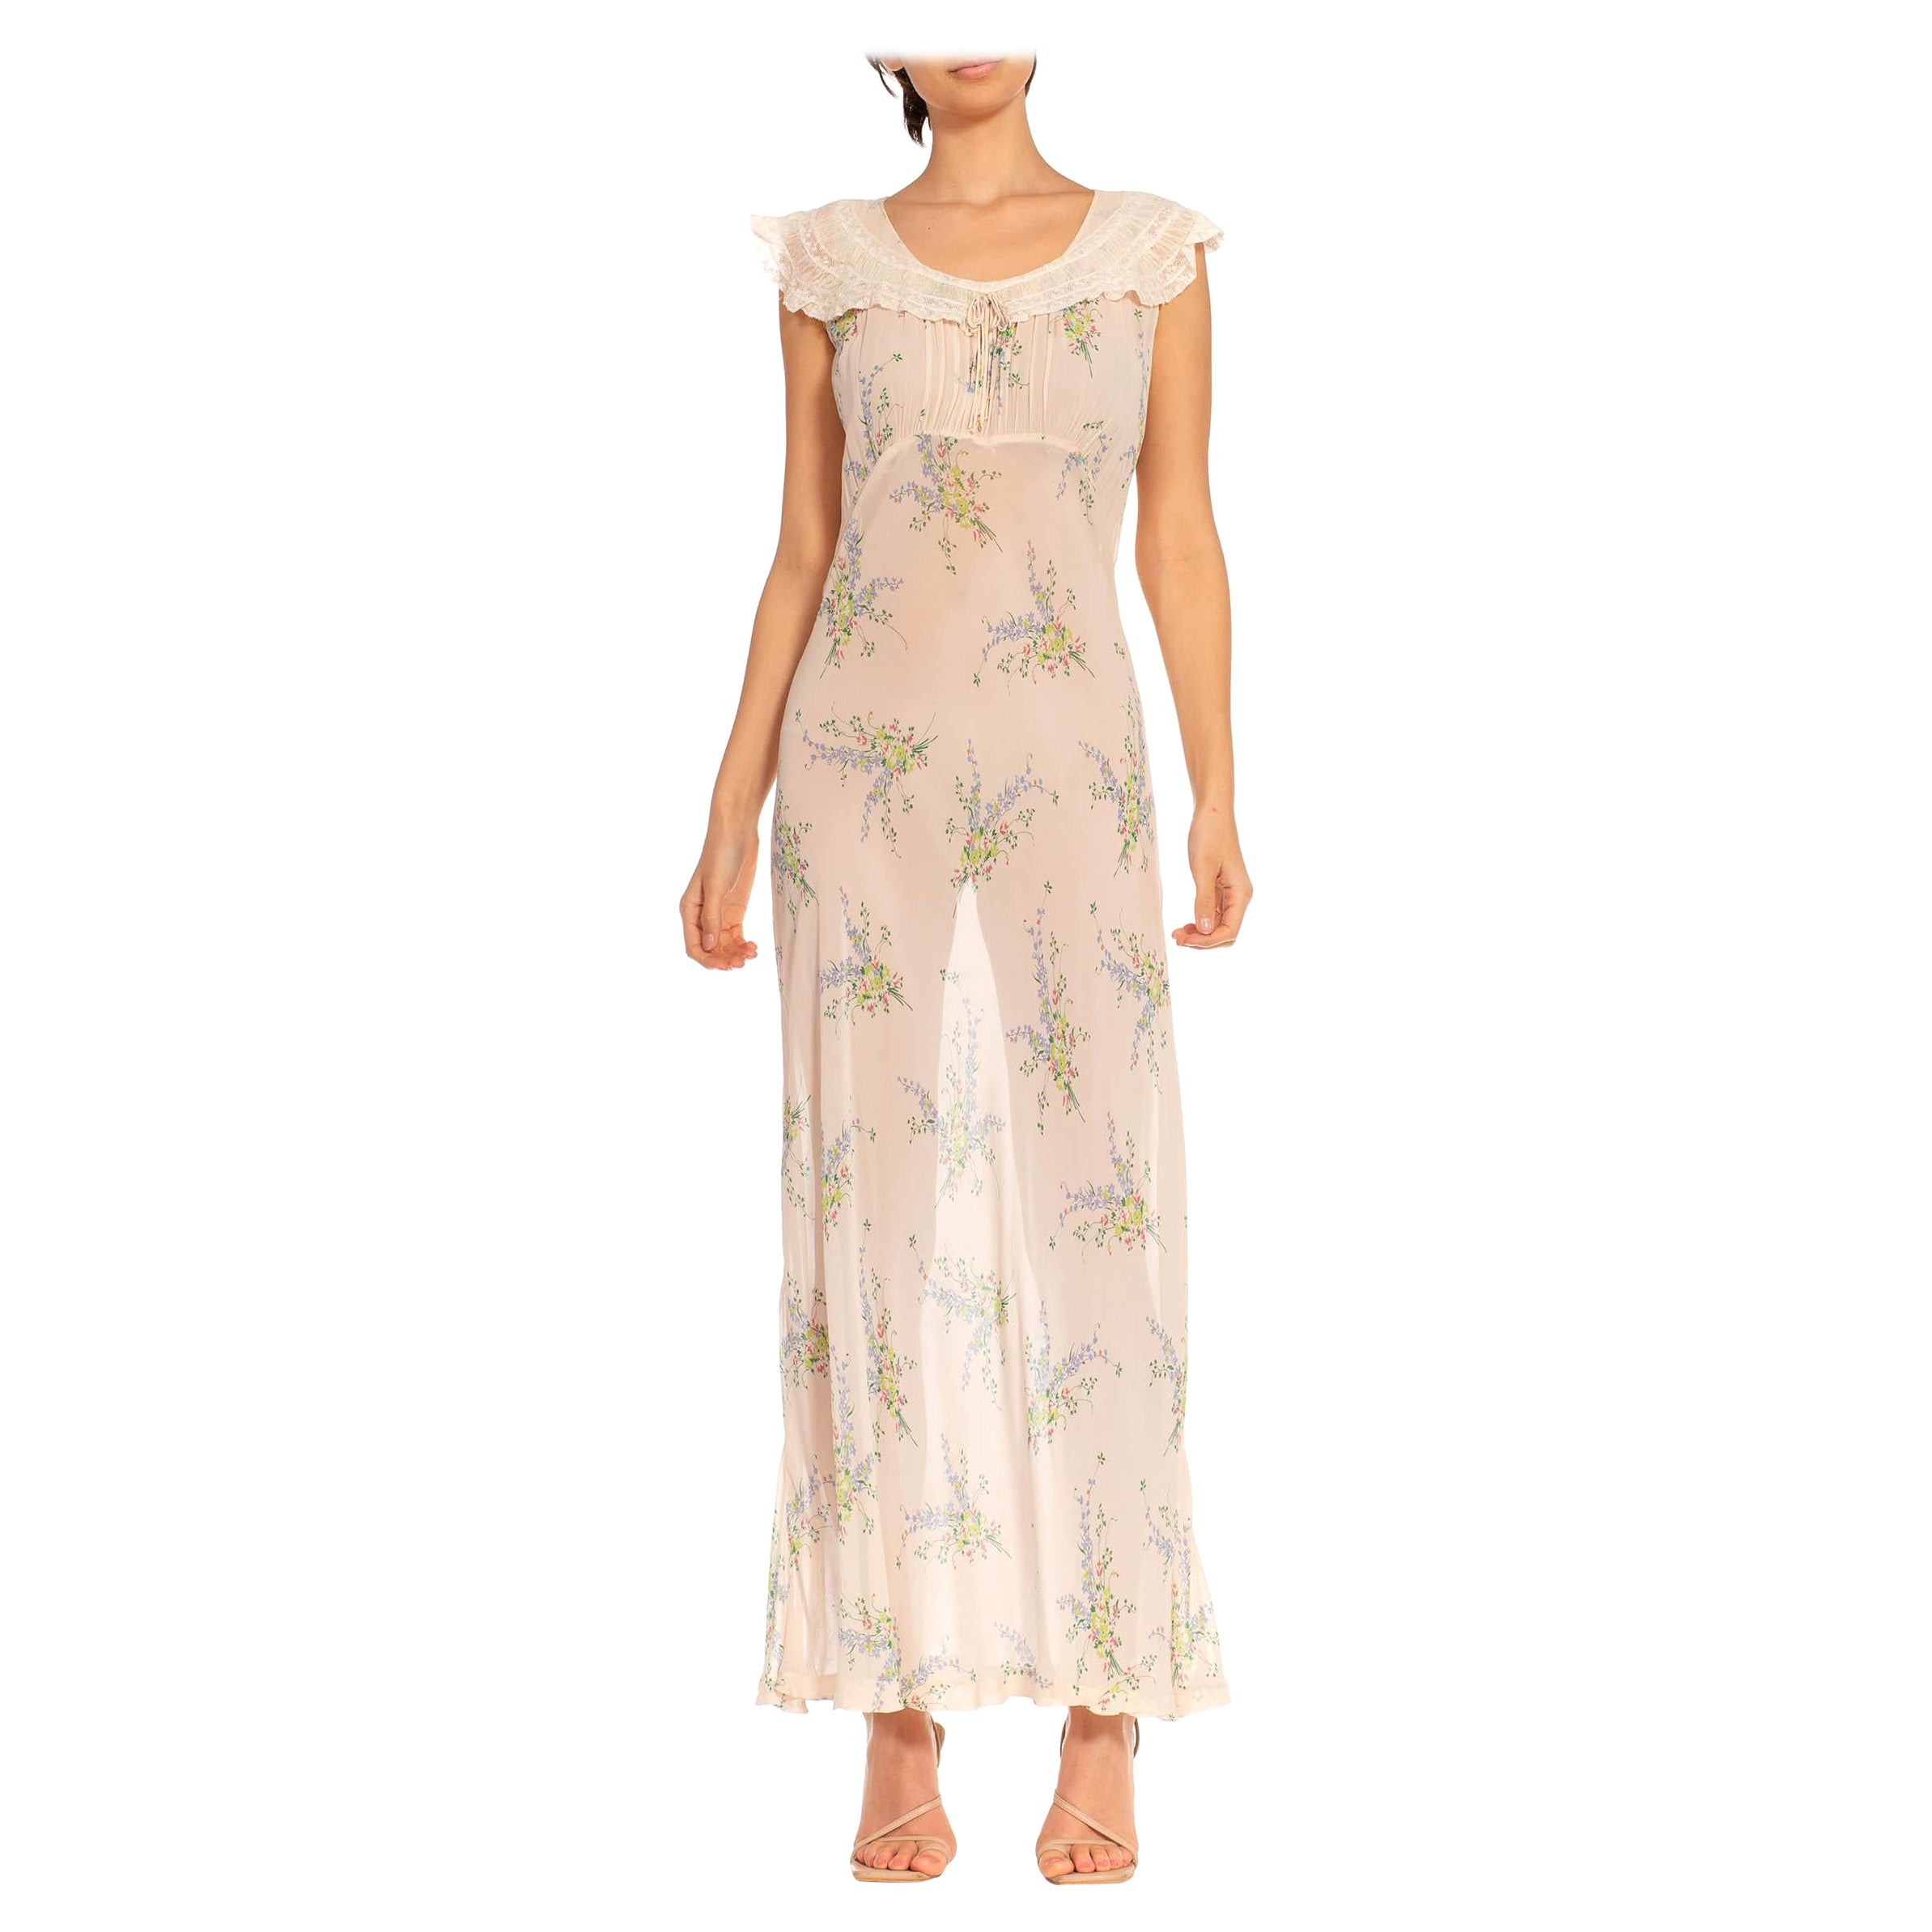 1930S White & Blue Nylon Floral Slip Dress With Lace Trim Neckline